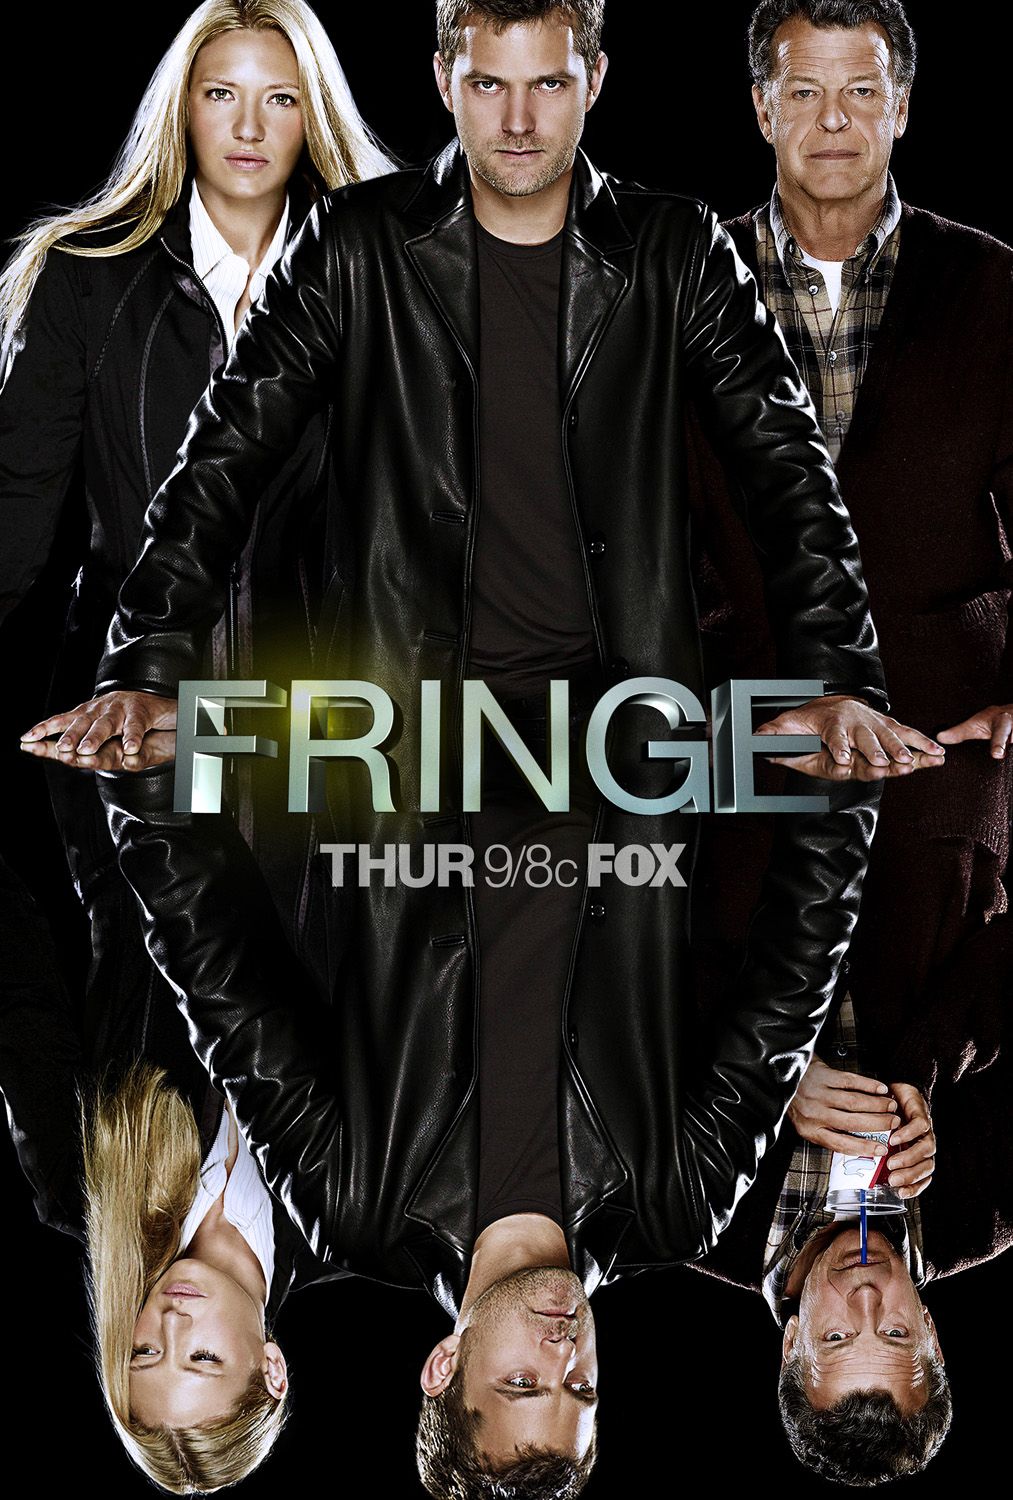 Extra Large TV Poster Image for Fringe (#18 of 33)